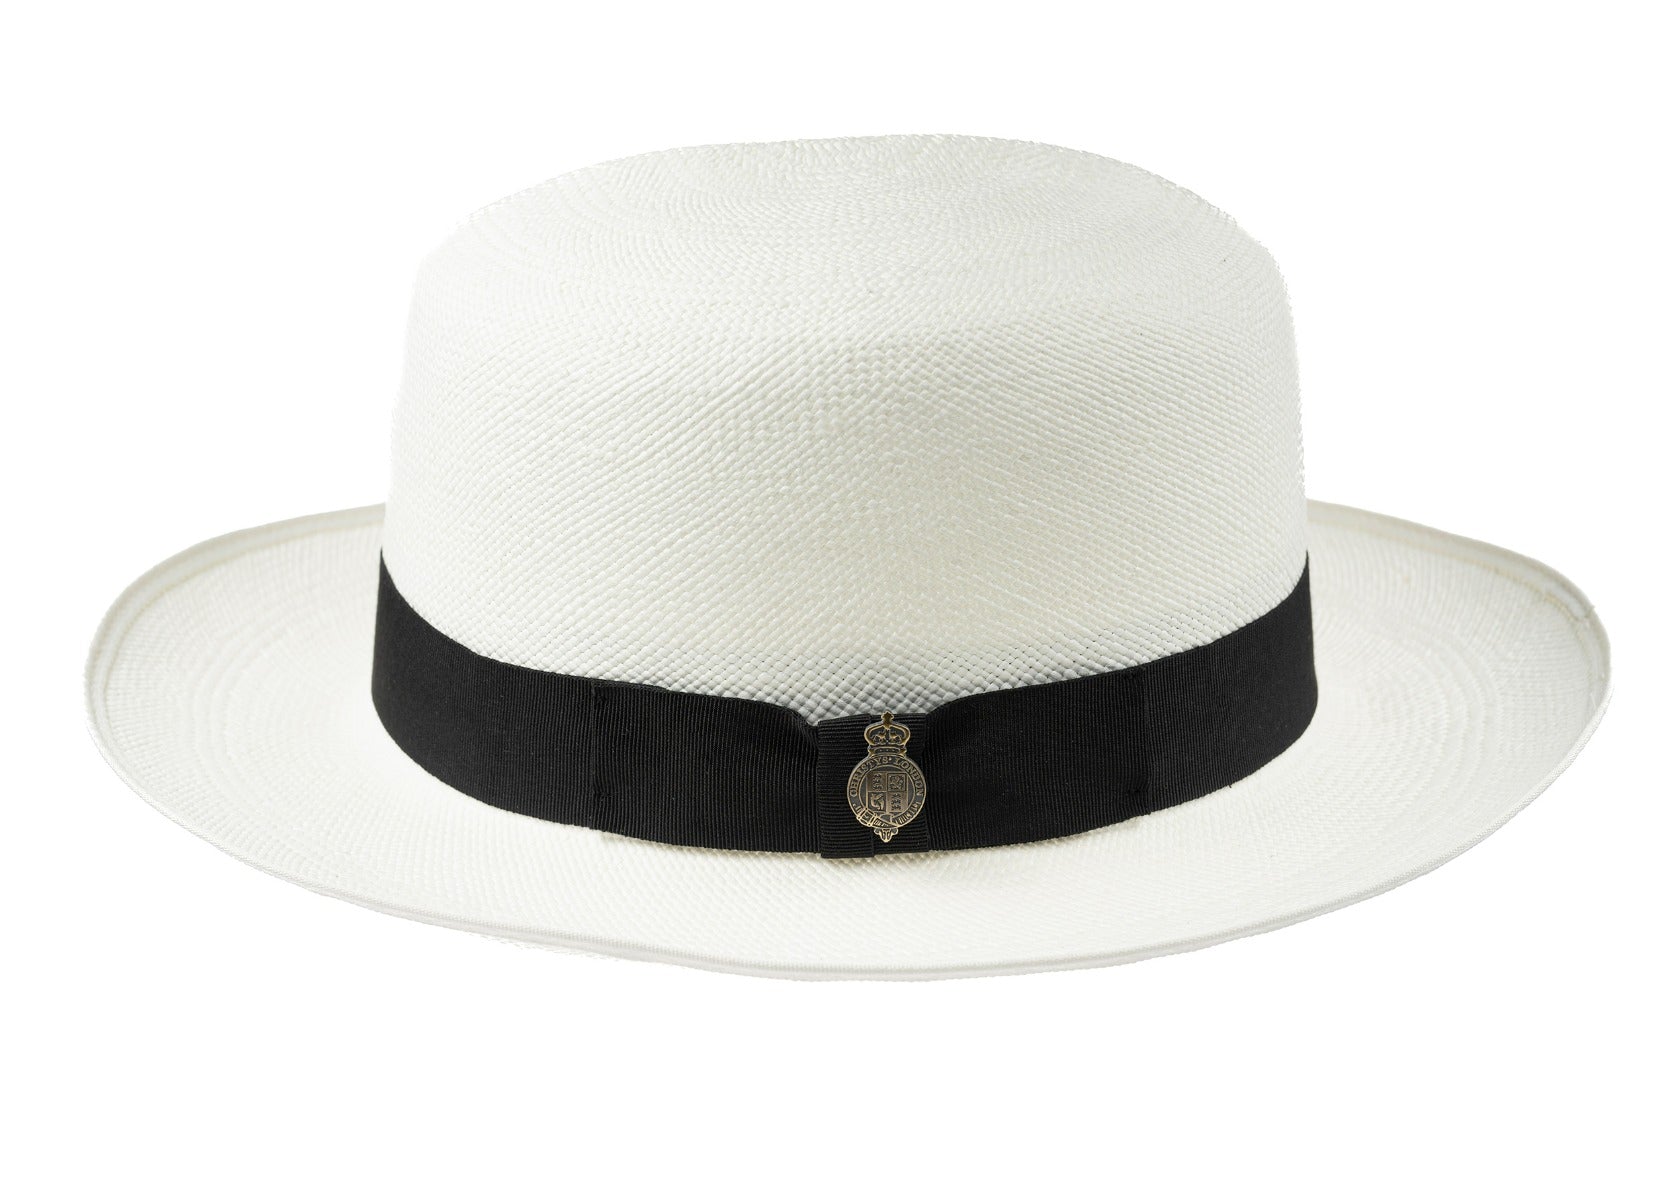 Superfine Folder Panama Hat With Black Band & Cream Binding